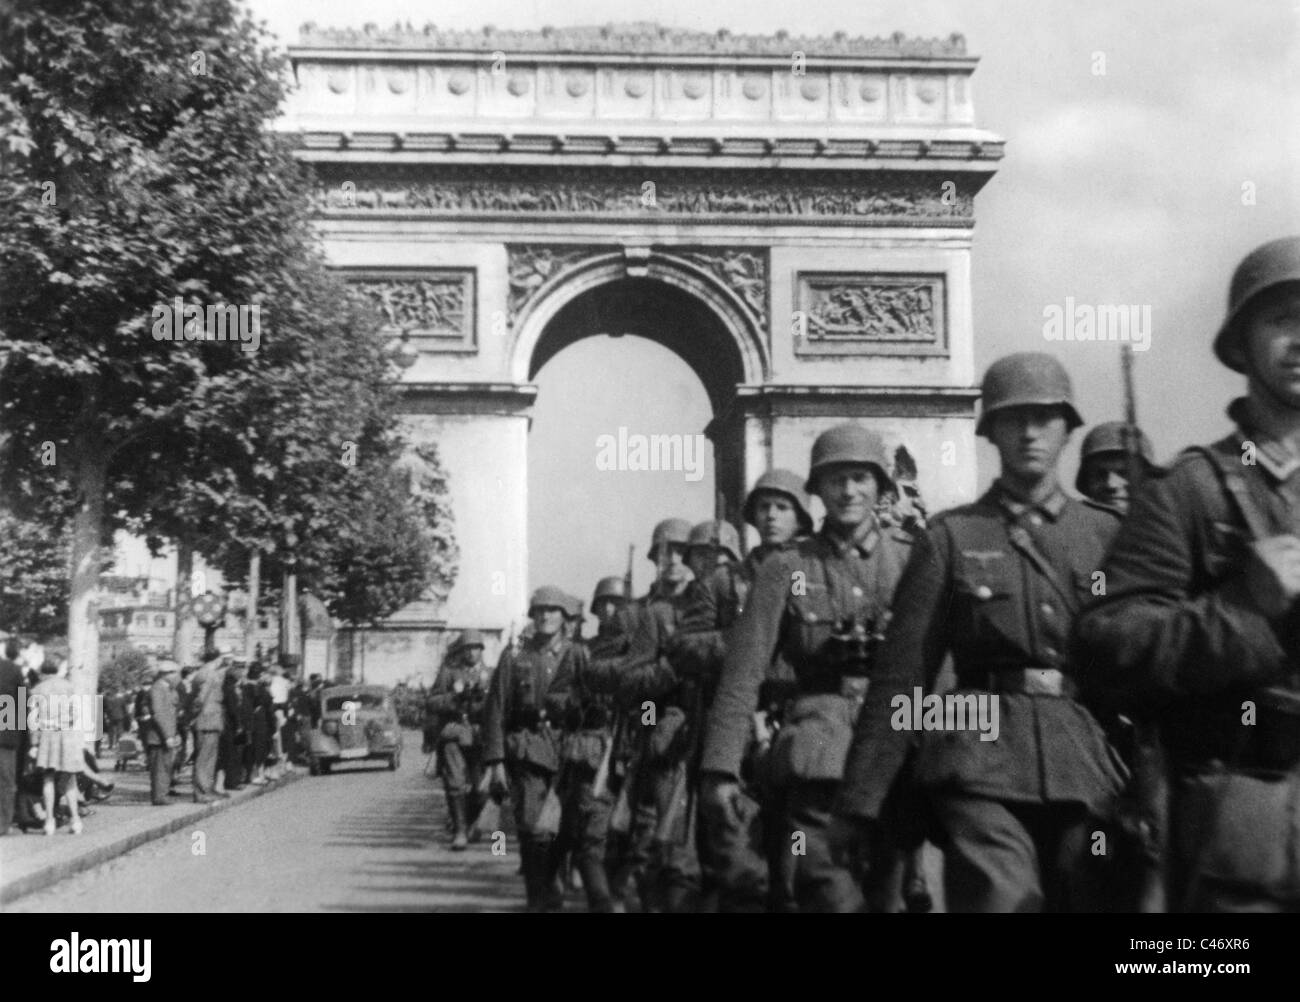 second-world-war-german-troops-marching-into-paris-14061940-C46XR6.jpg